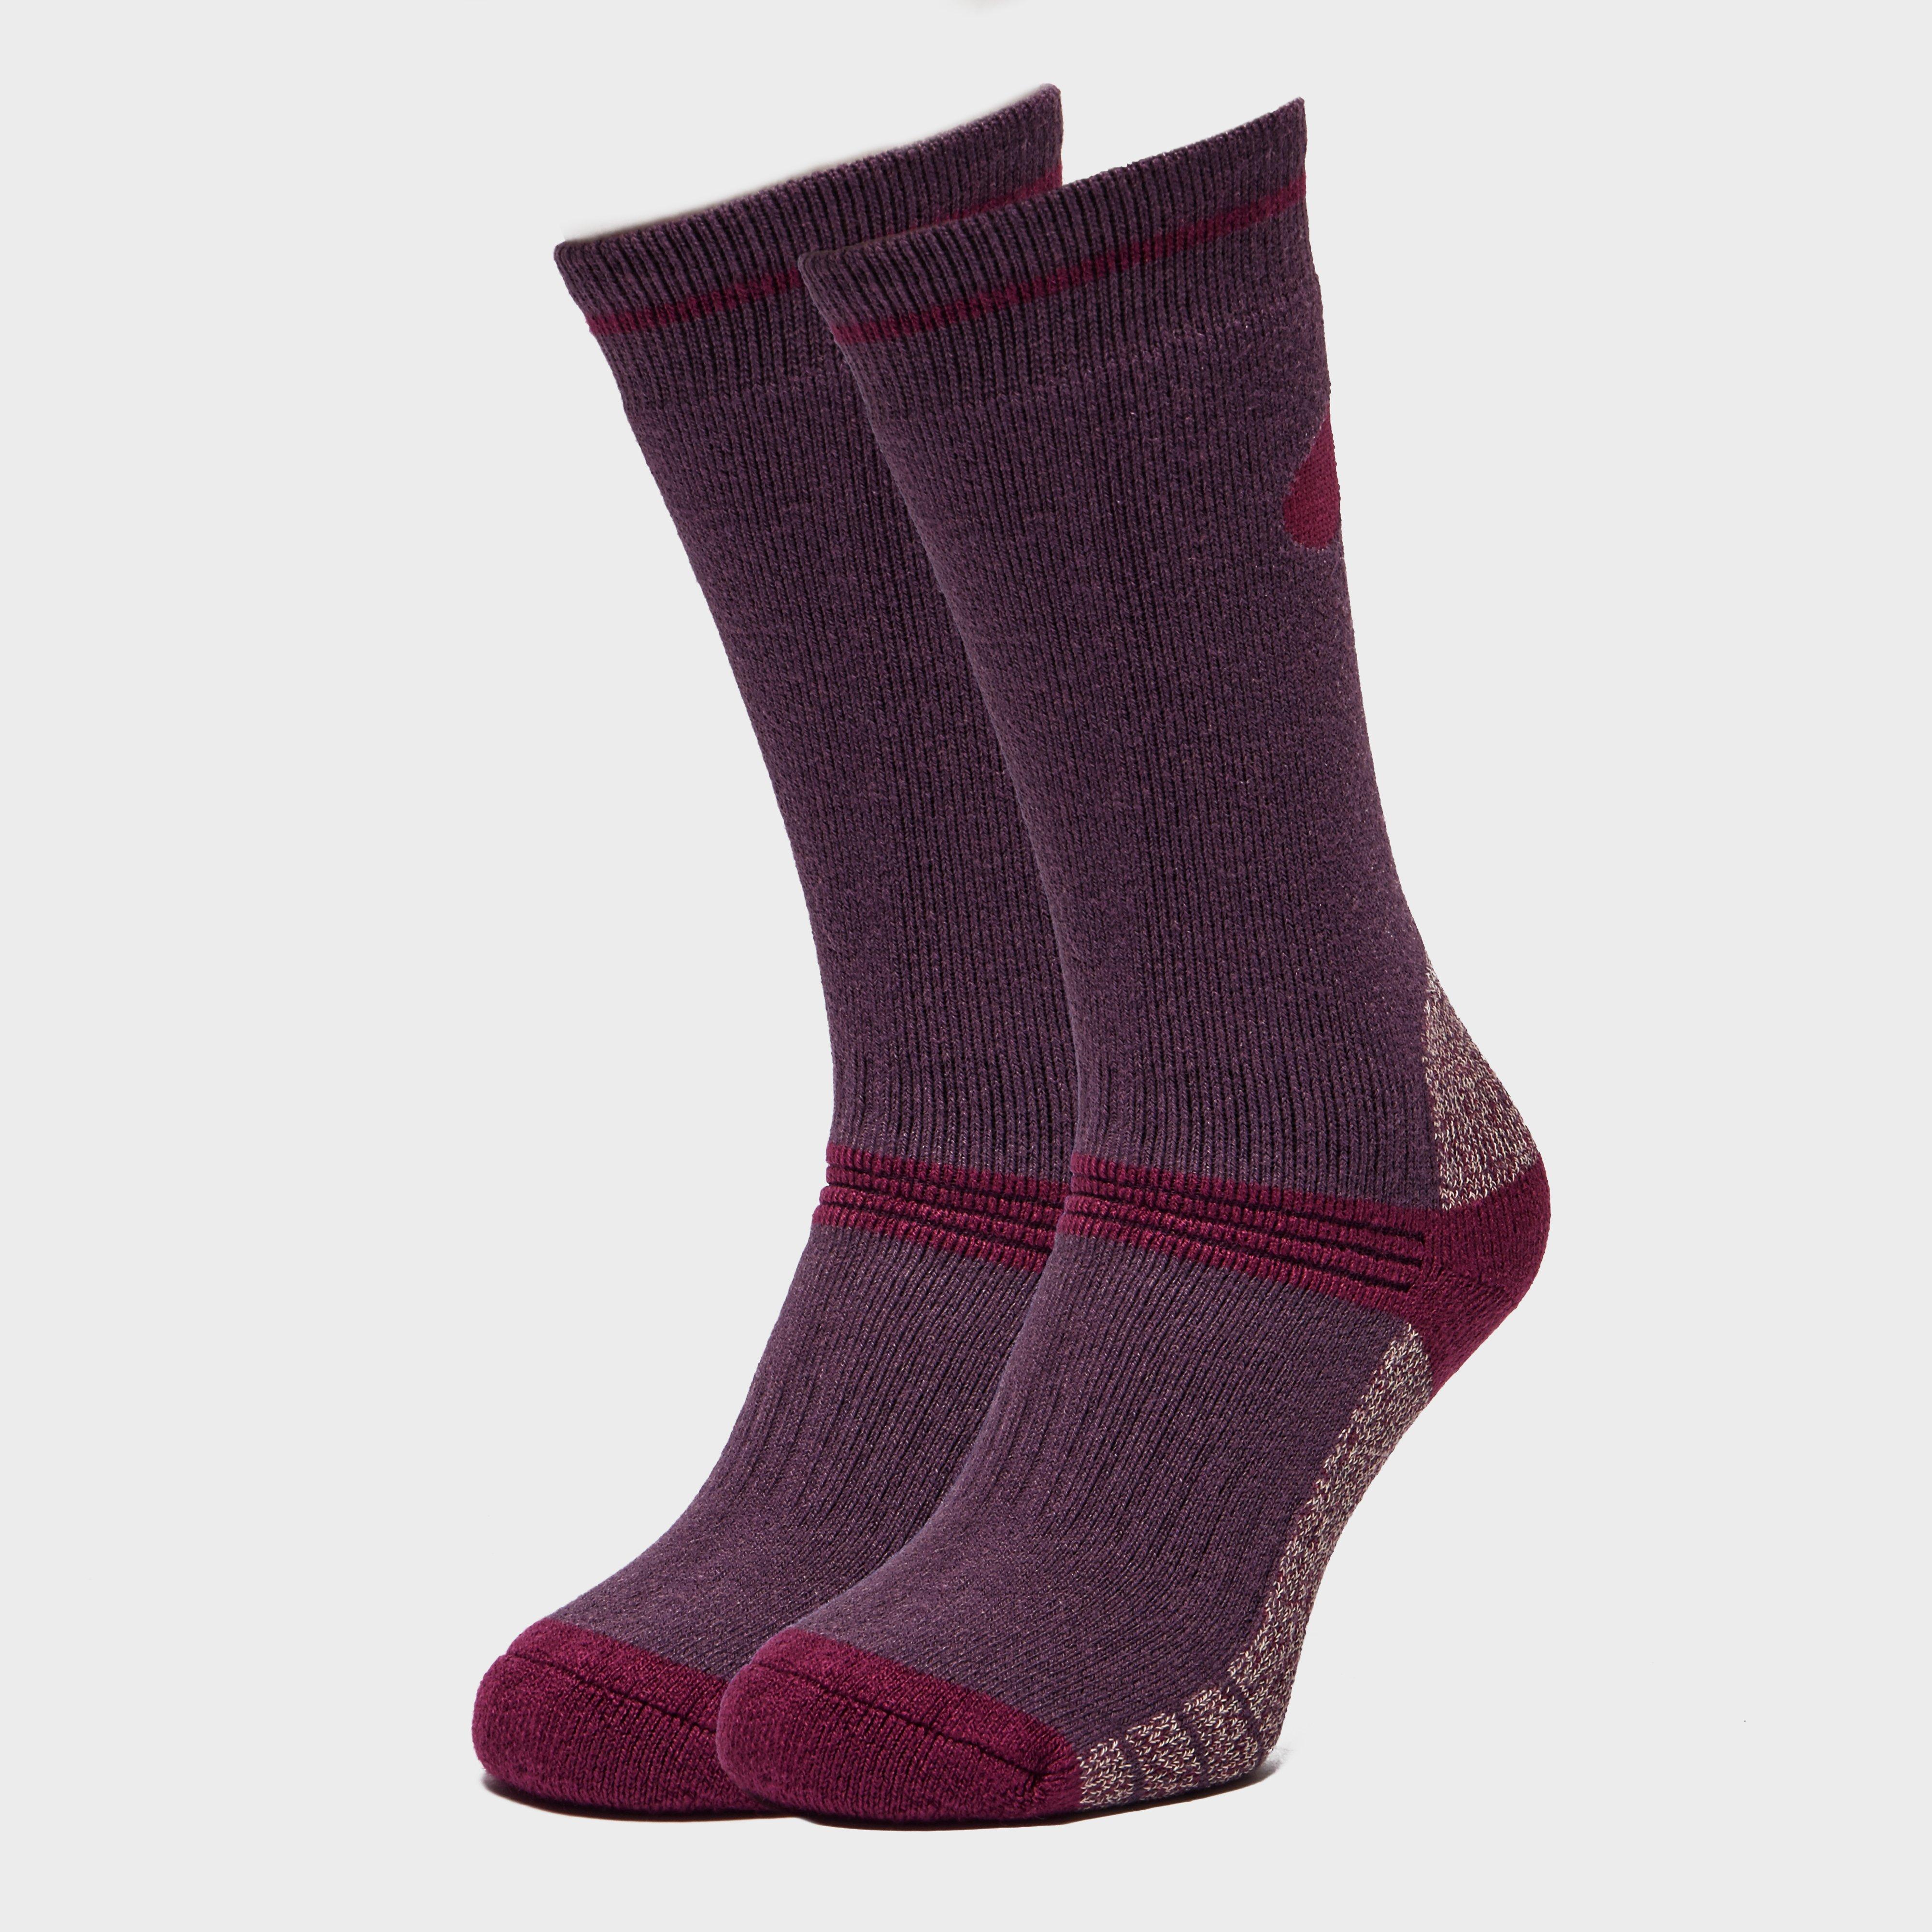 Peter Storm Womens Heavyweight Outdoor Socks - 2 Pack - Purple/plum  Purple/plum